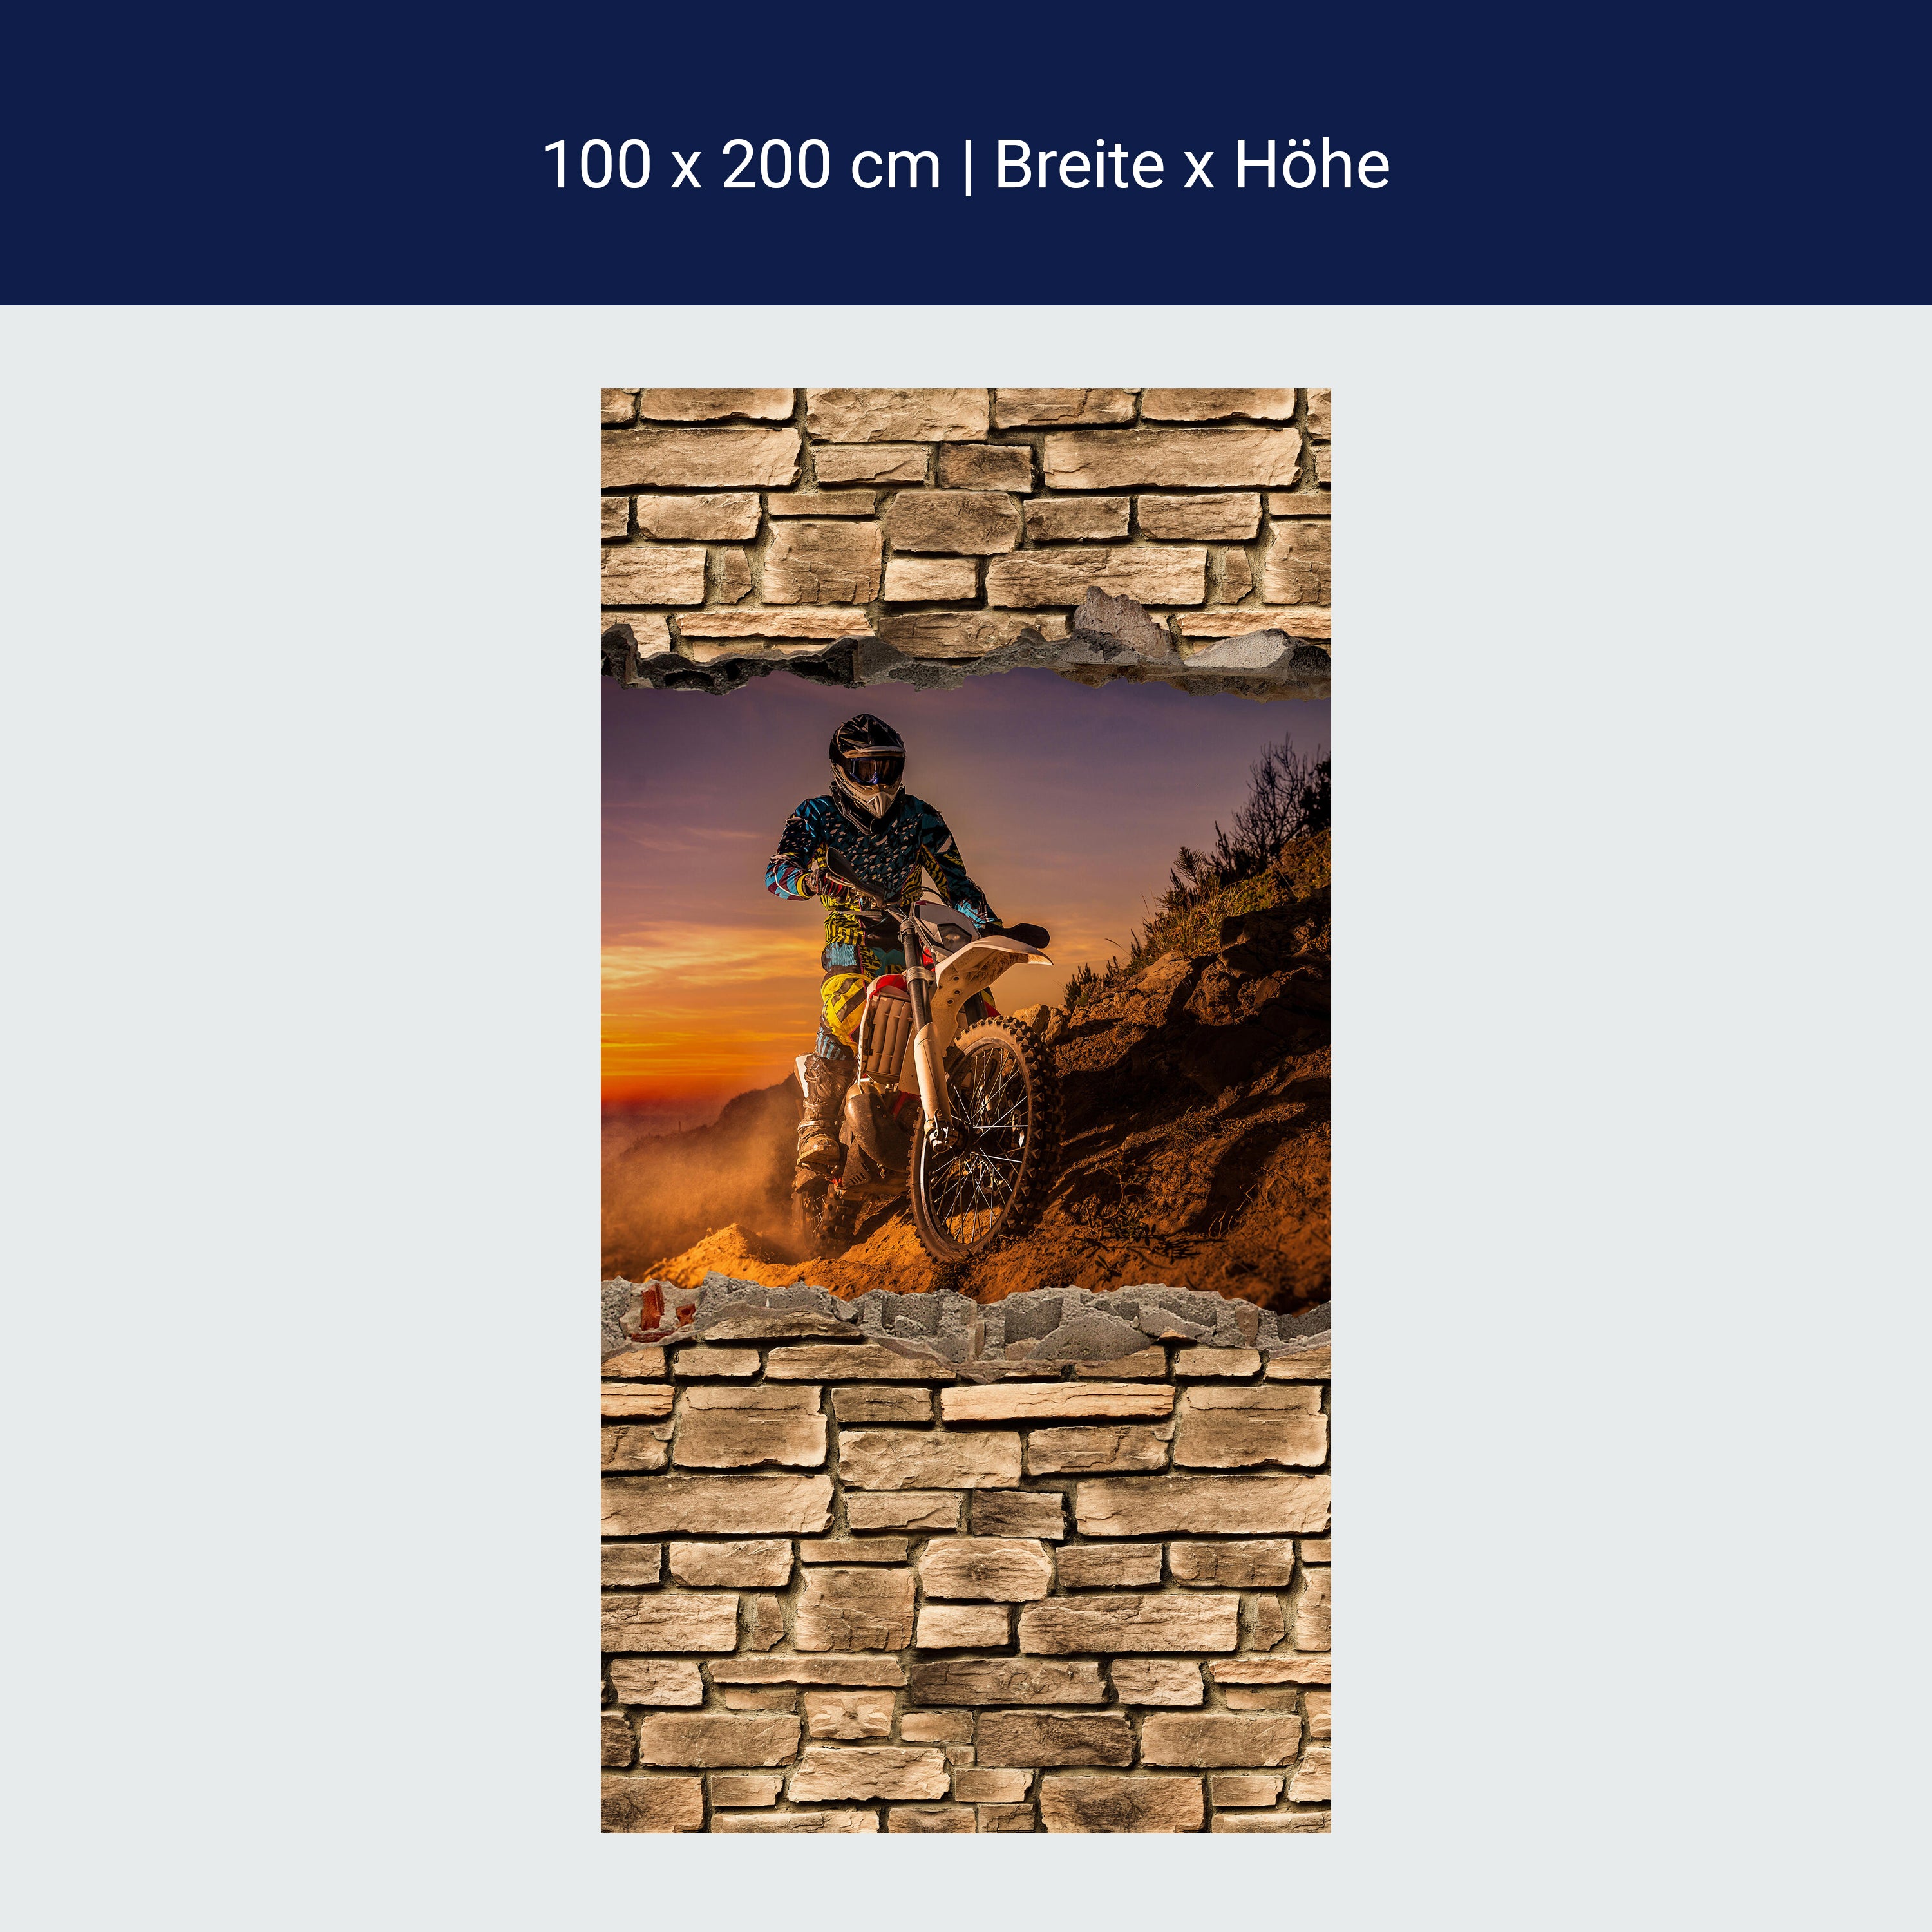 Shower screen 3D Extreme Biker stone wall M0668